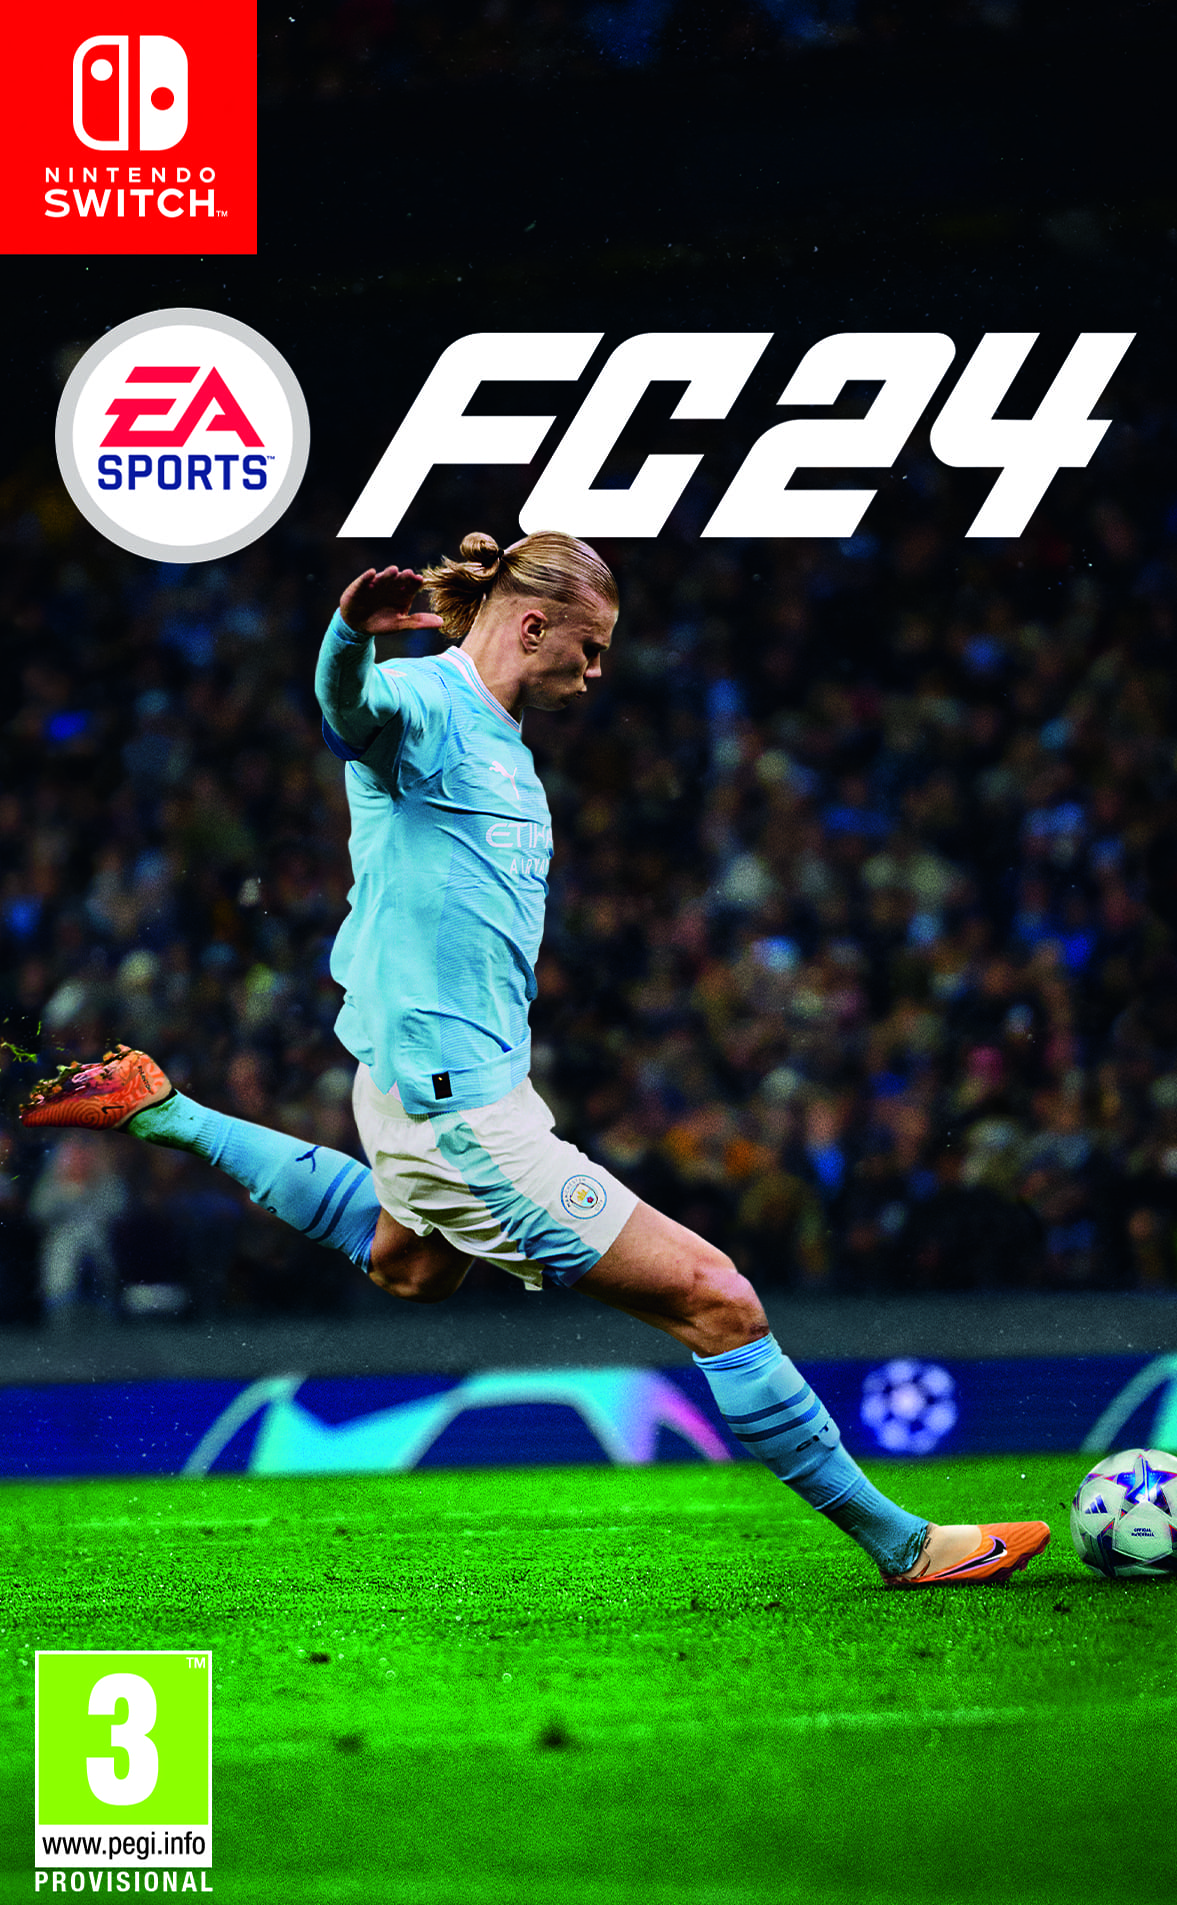 NS - EA Sports FC 24 